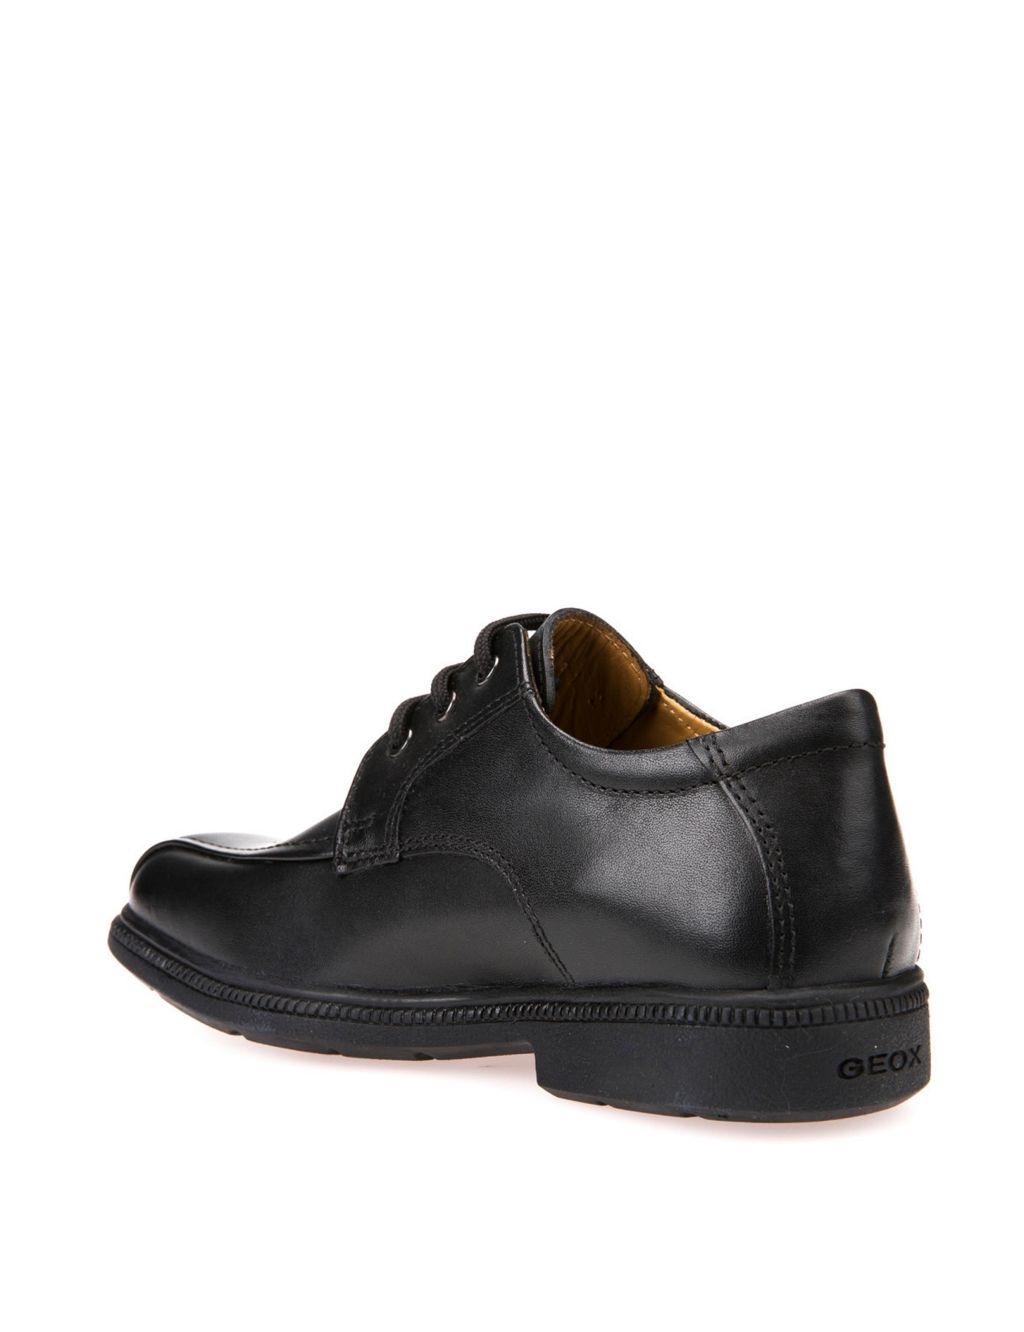 Leather School Shoes (2½ Large-8 Large) image 3